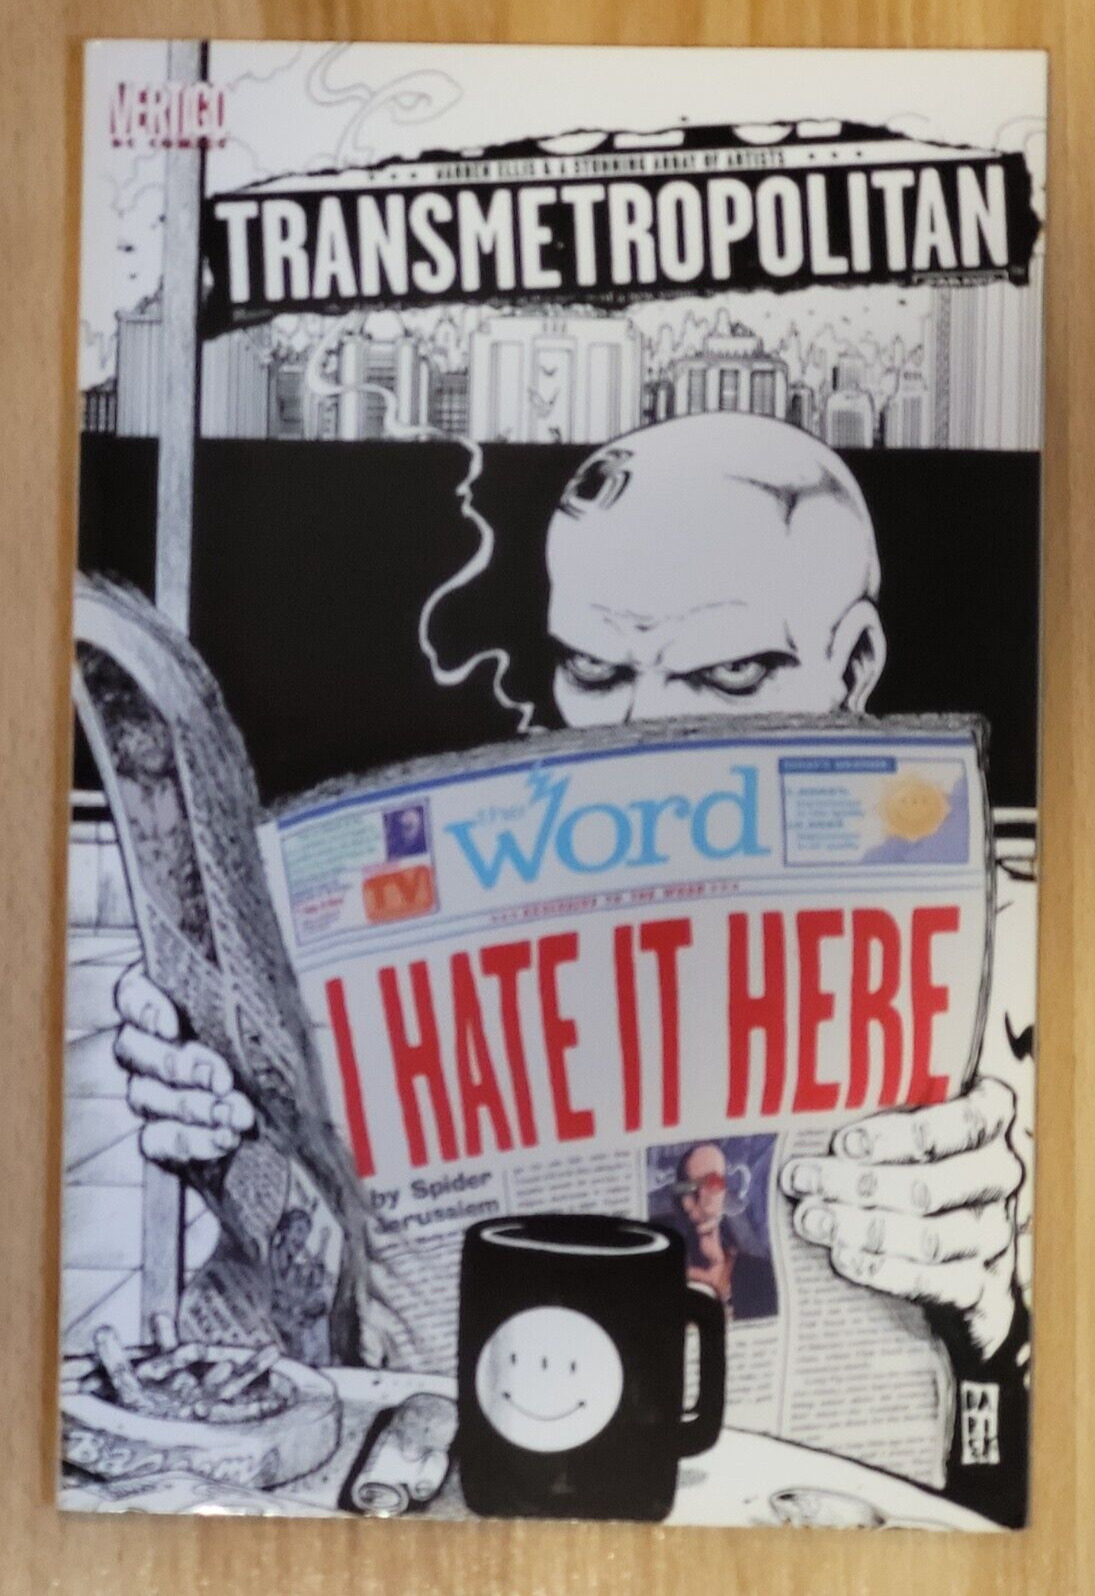 Transmetropolitan “I Hate It Here” (Paperback) - DC Comics, 2000